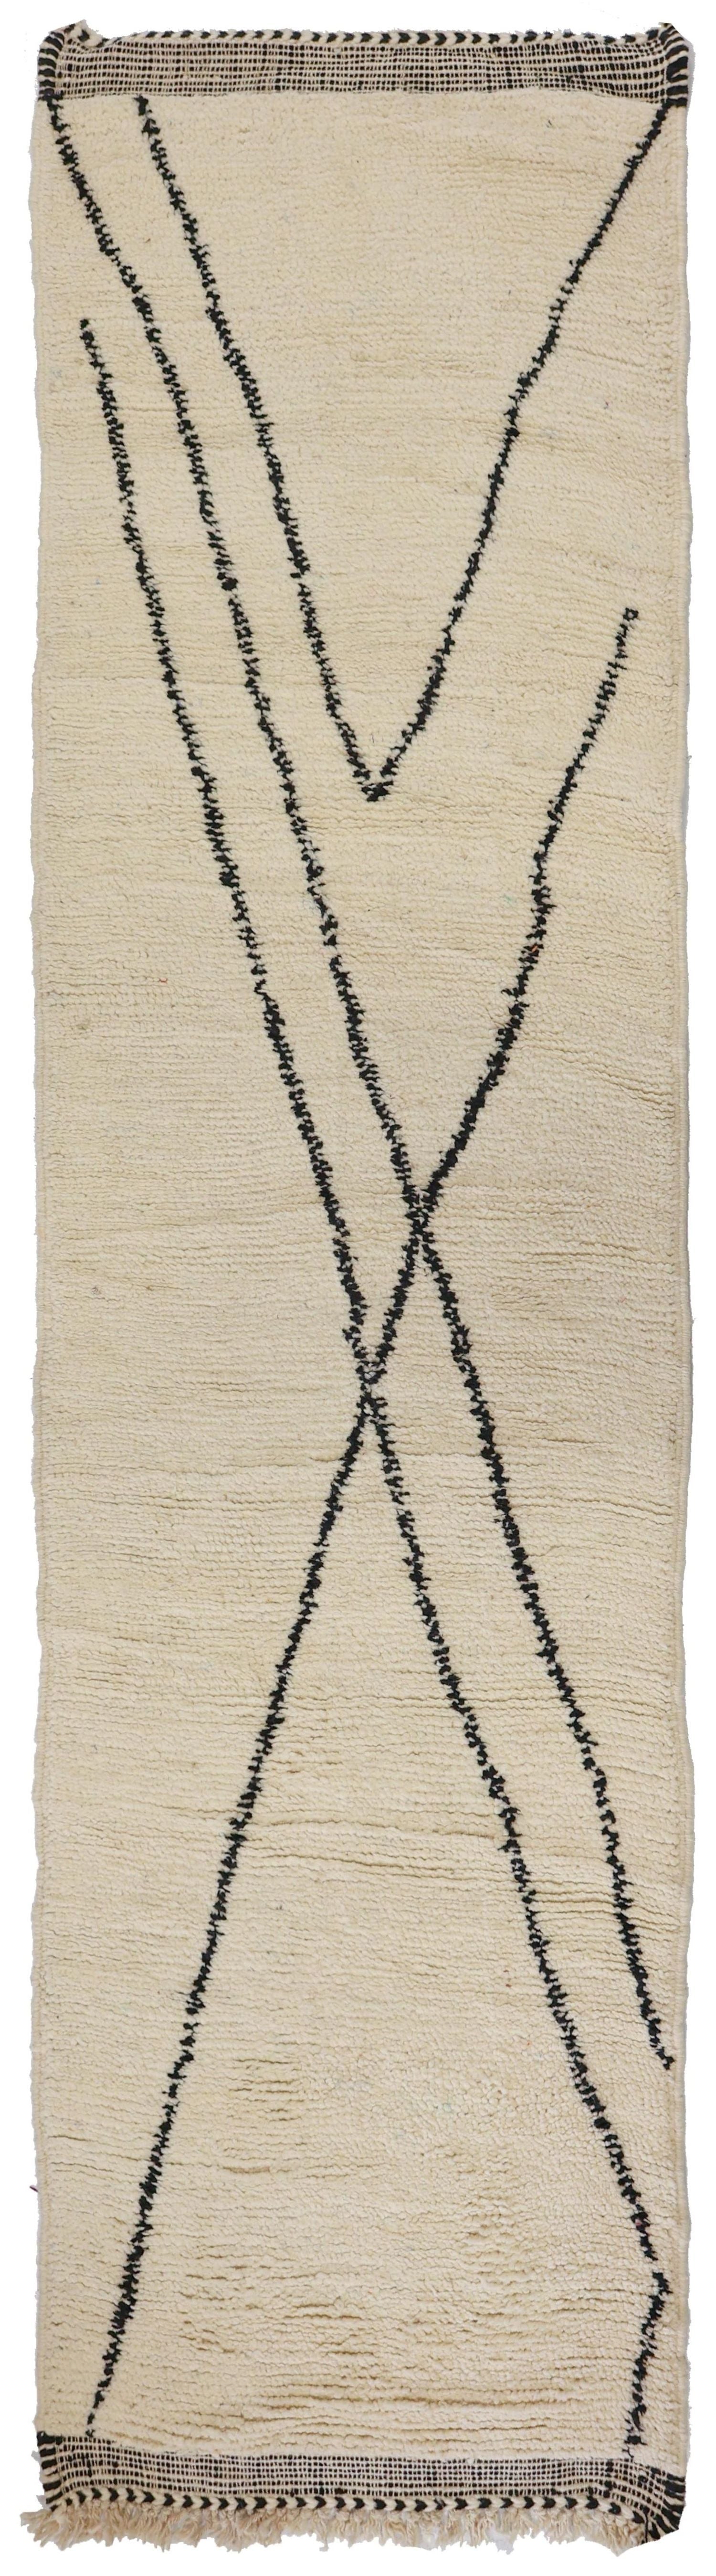 Berber Handwoven Tribal Rug